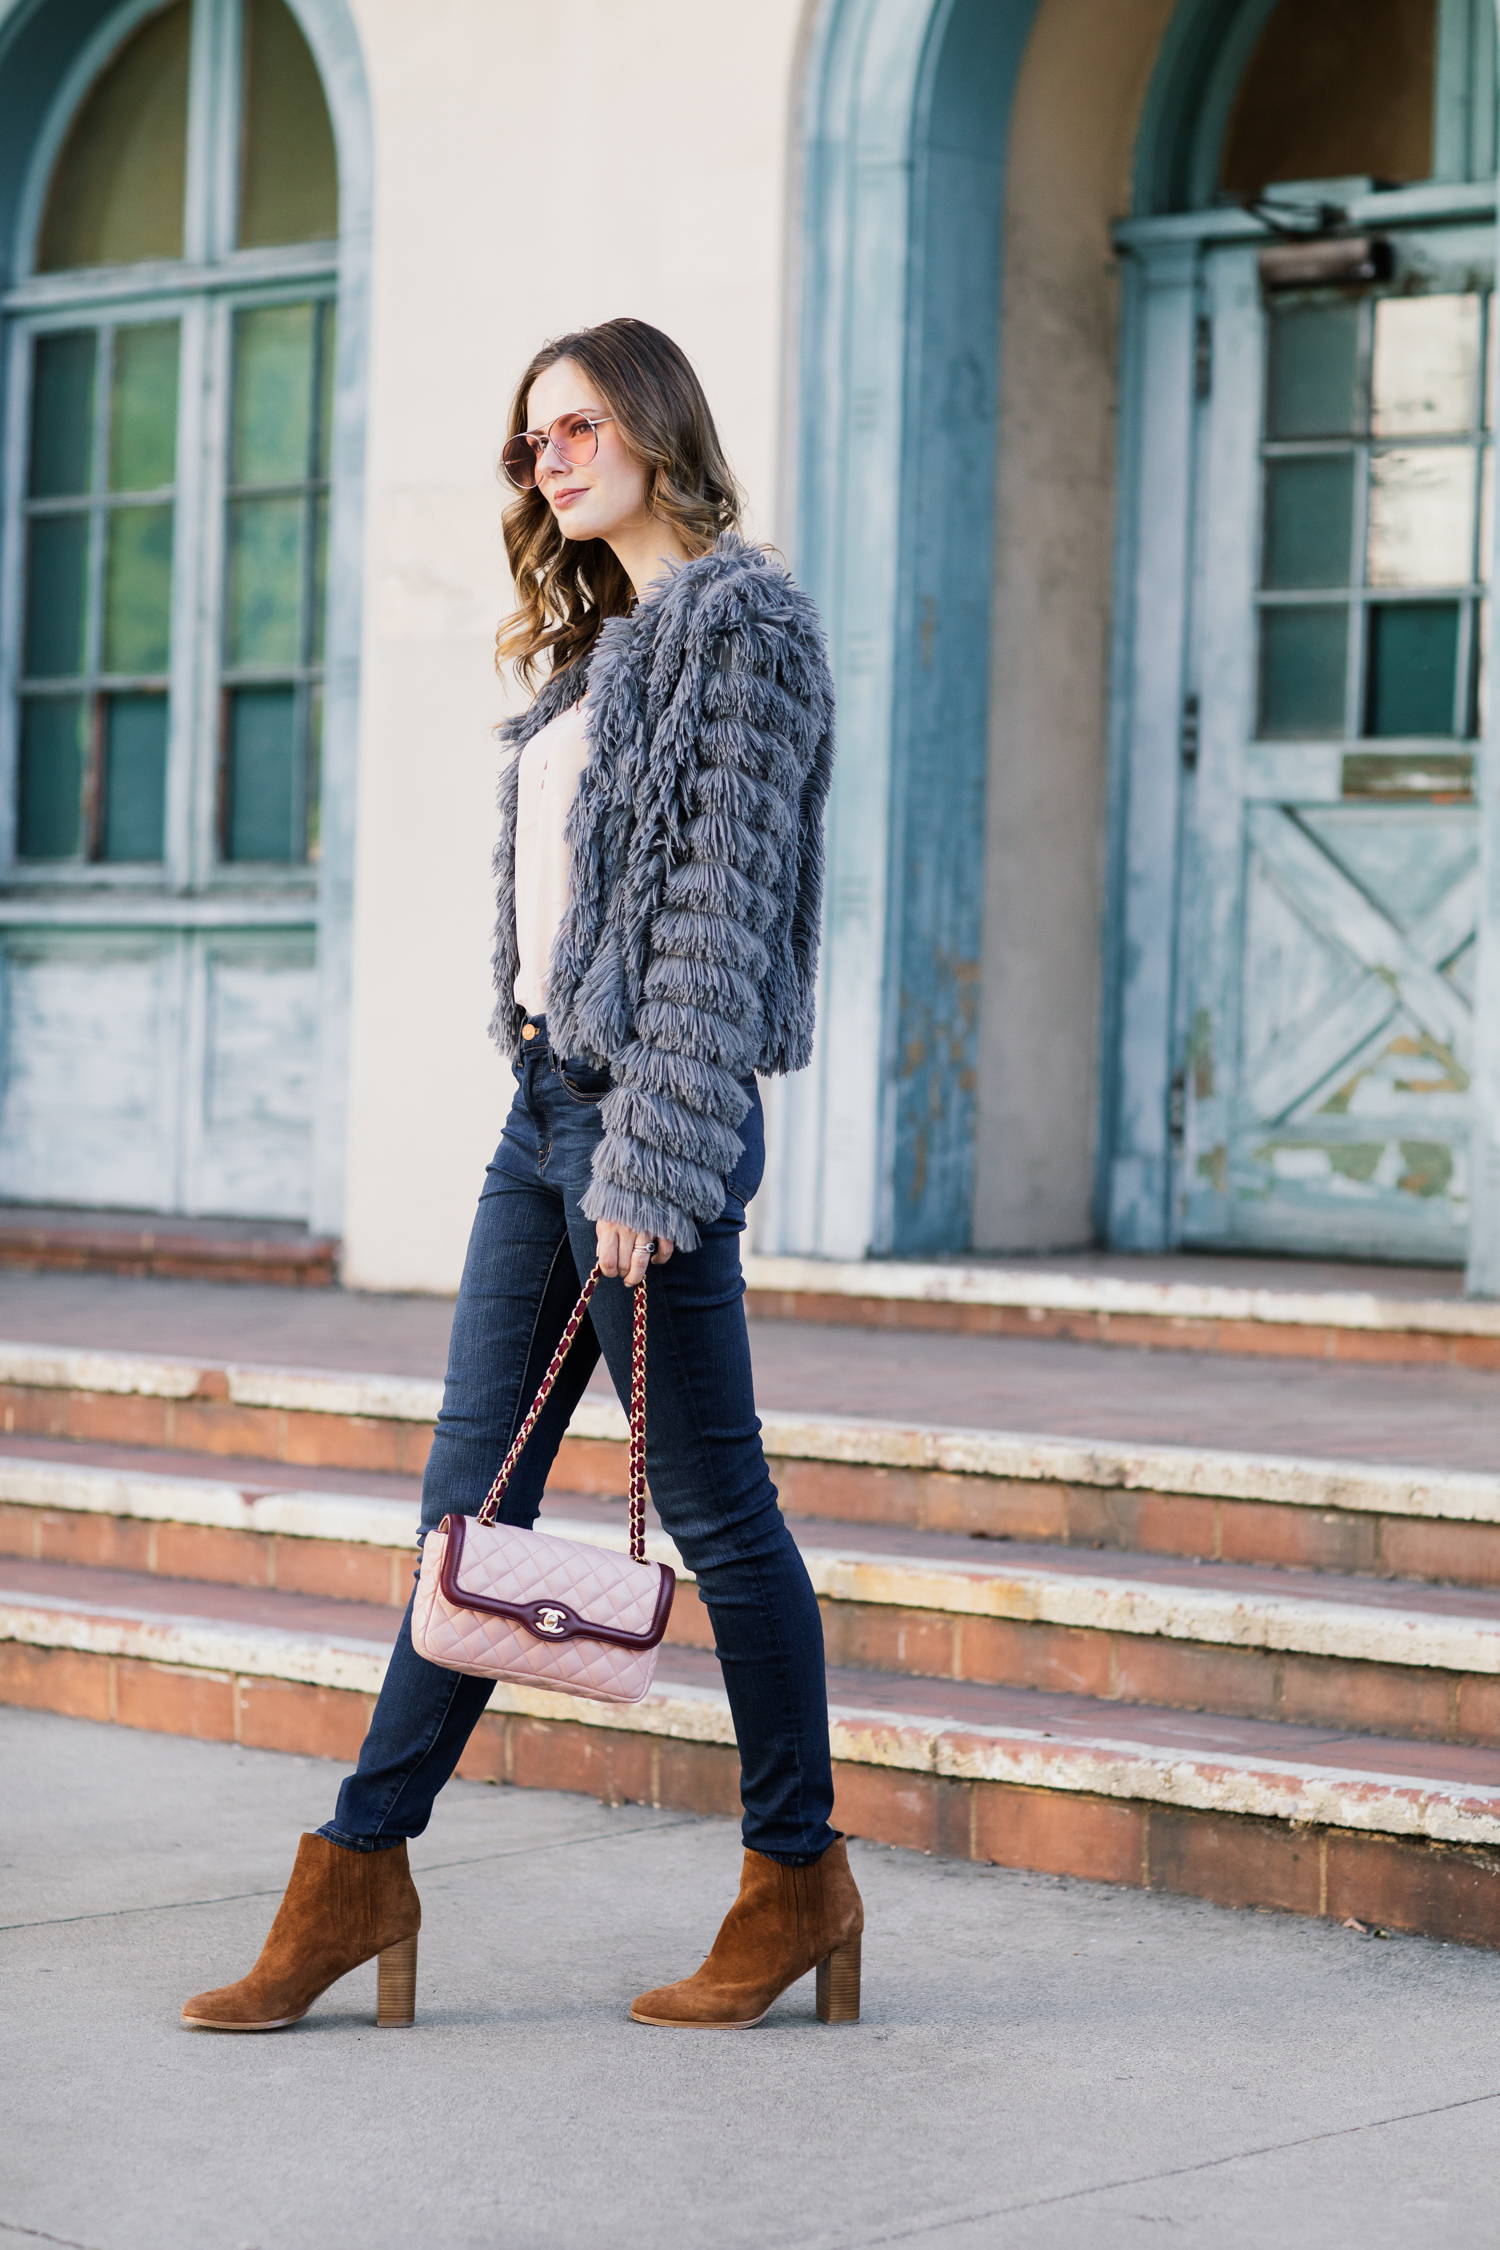 Alyssa Campanella of The A List blog shares her favorite faux fur pieces for winter in Greylin Cordella coat